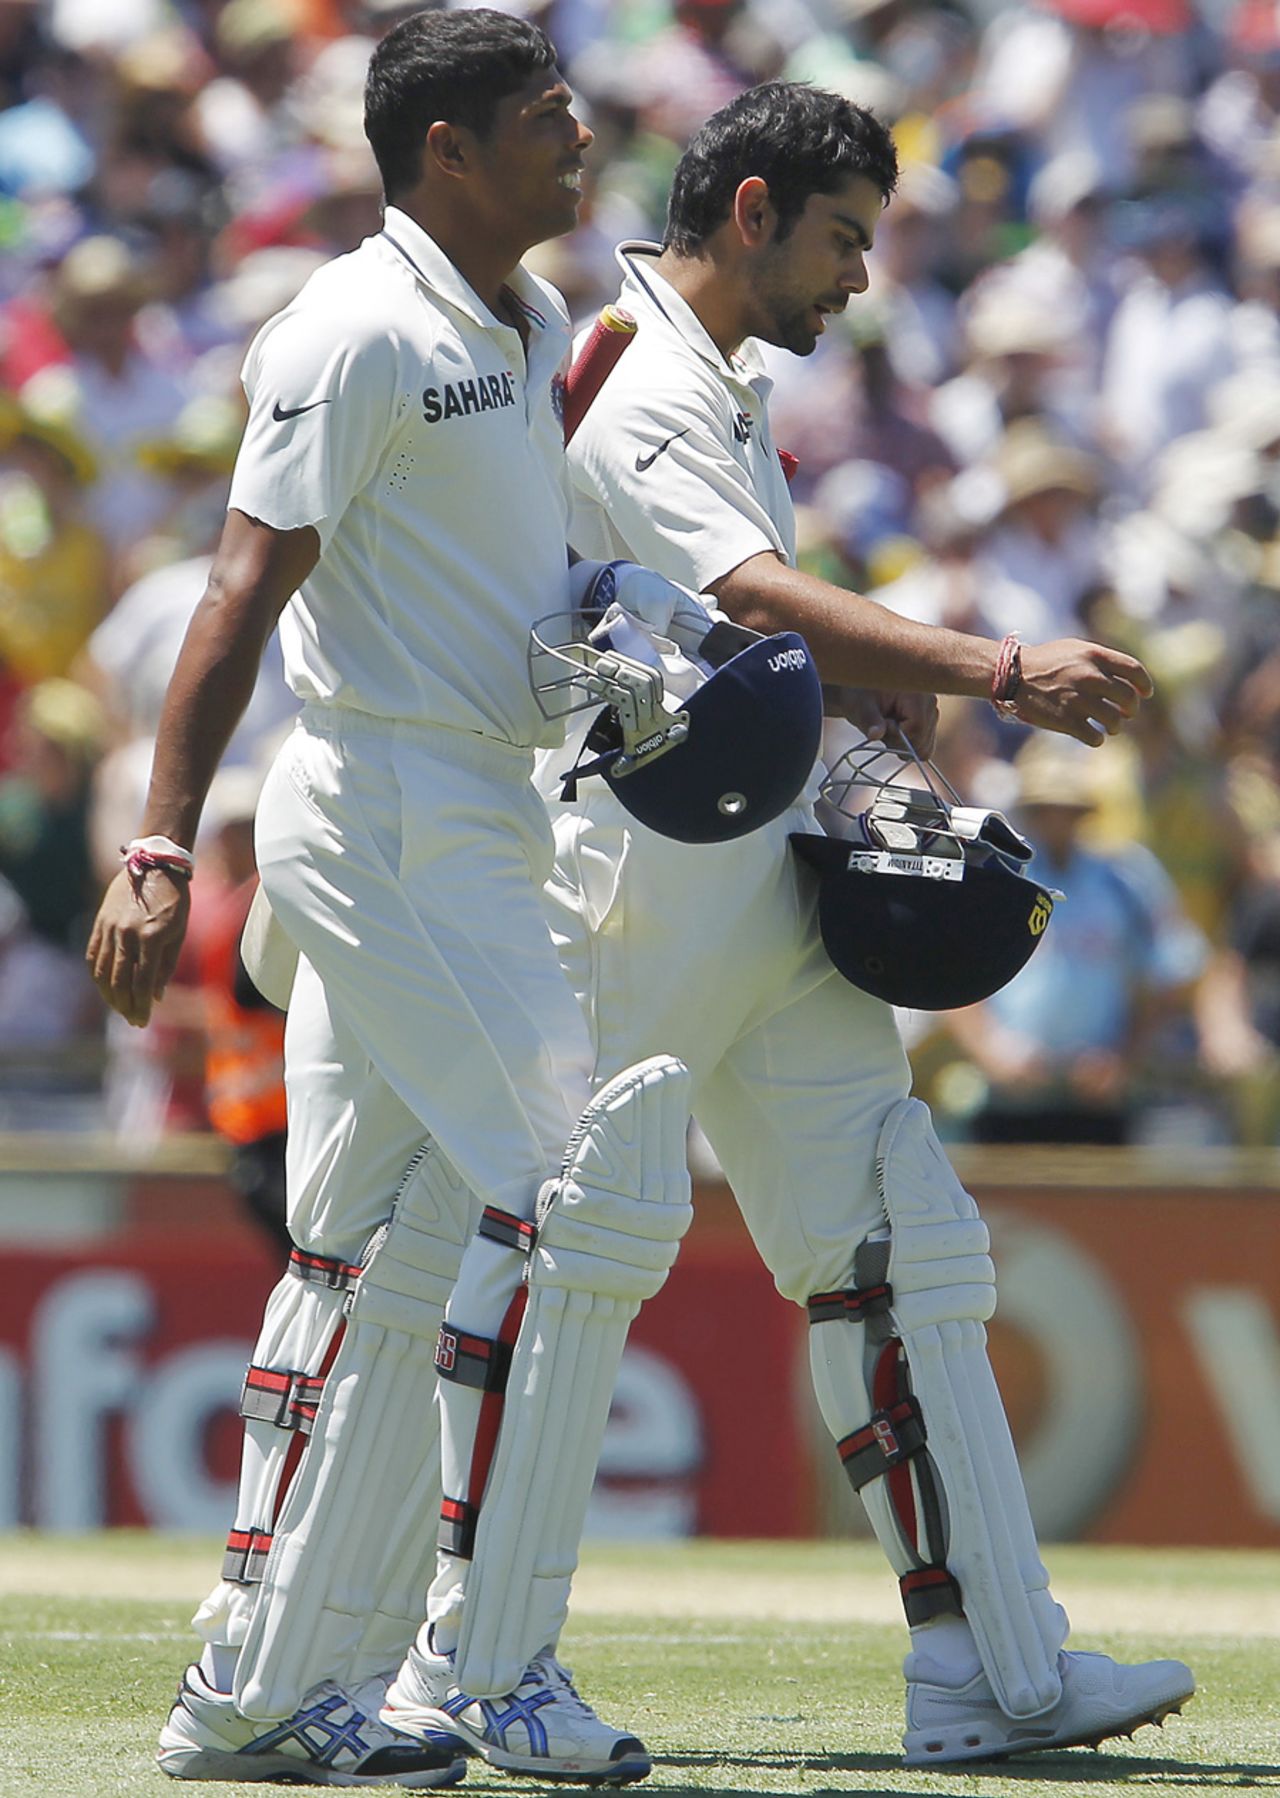 Umesh Yadav and Virat Kohli walk back after India's innings defeat, Australia v India, 3rd Test, Perth, 3rd day, January 15, 2012